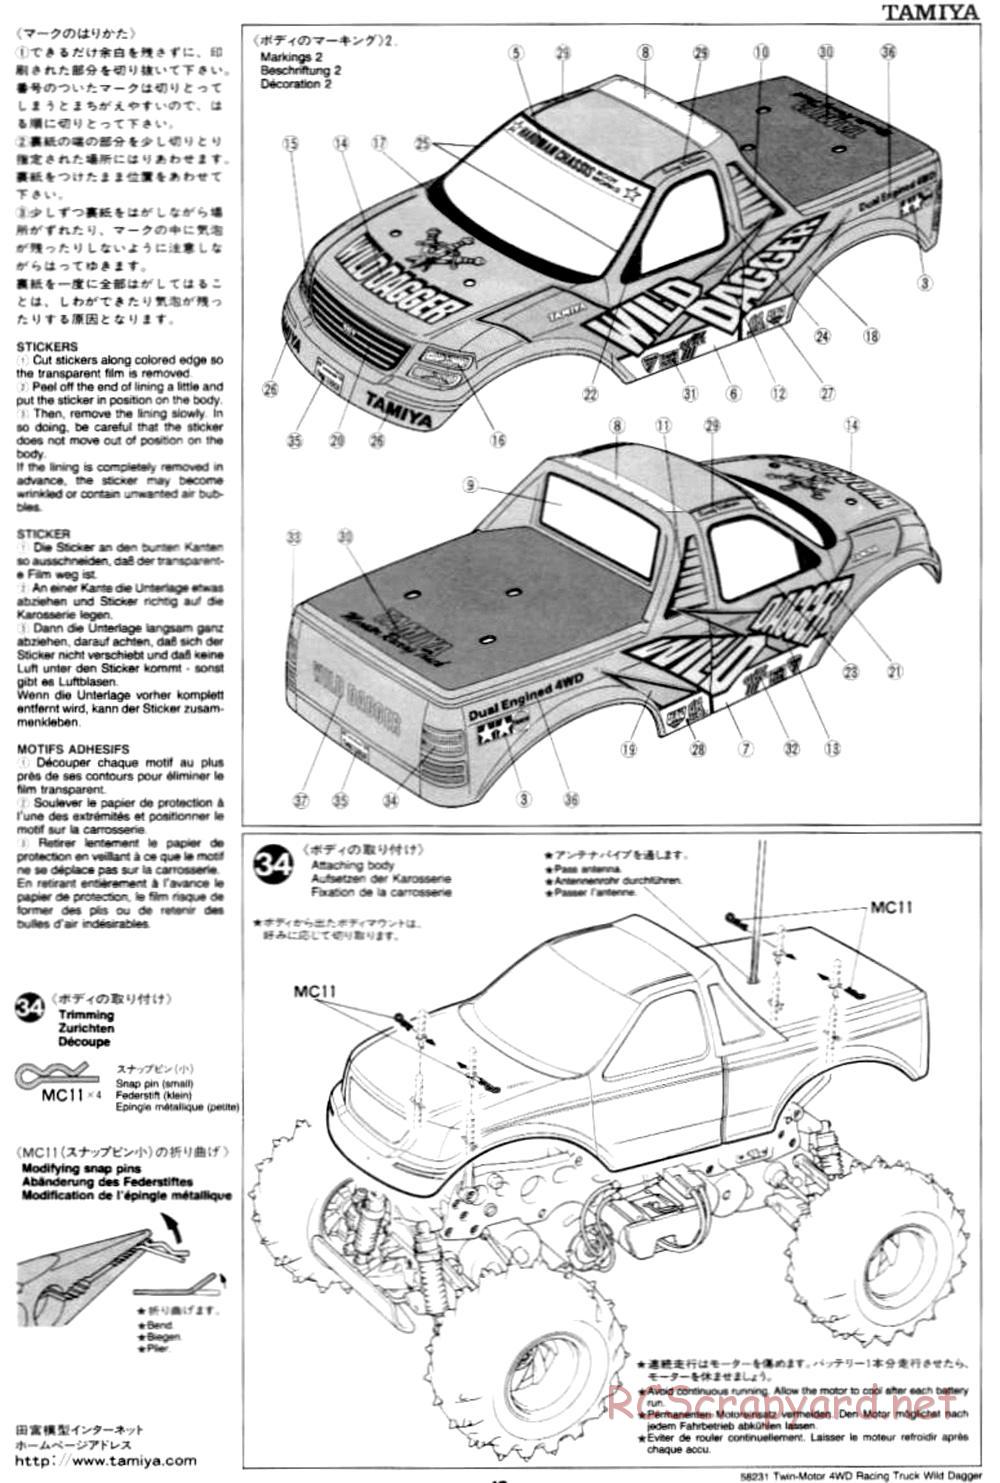 Tamiya - Wild Dagger - WR-01 Chassis - Manual - Page 19